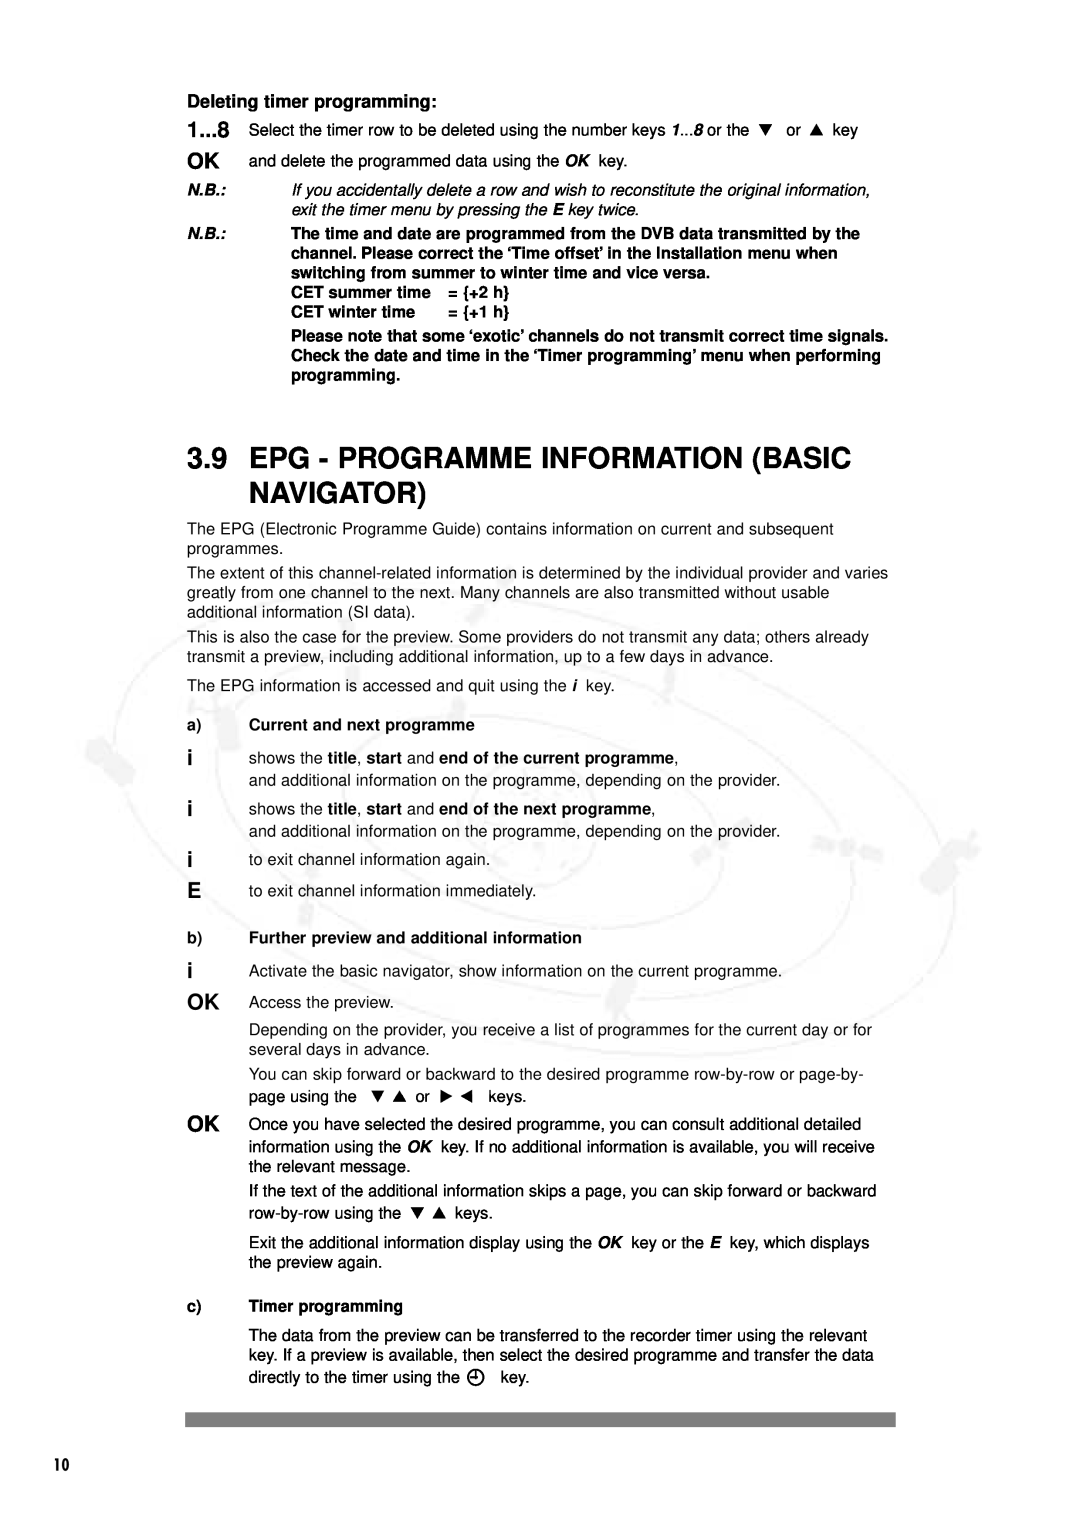 Philips DSR 1000 manual Epg - Programme Information Basic Navigator, 1...8, a Current and next programme, Timer programming 